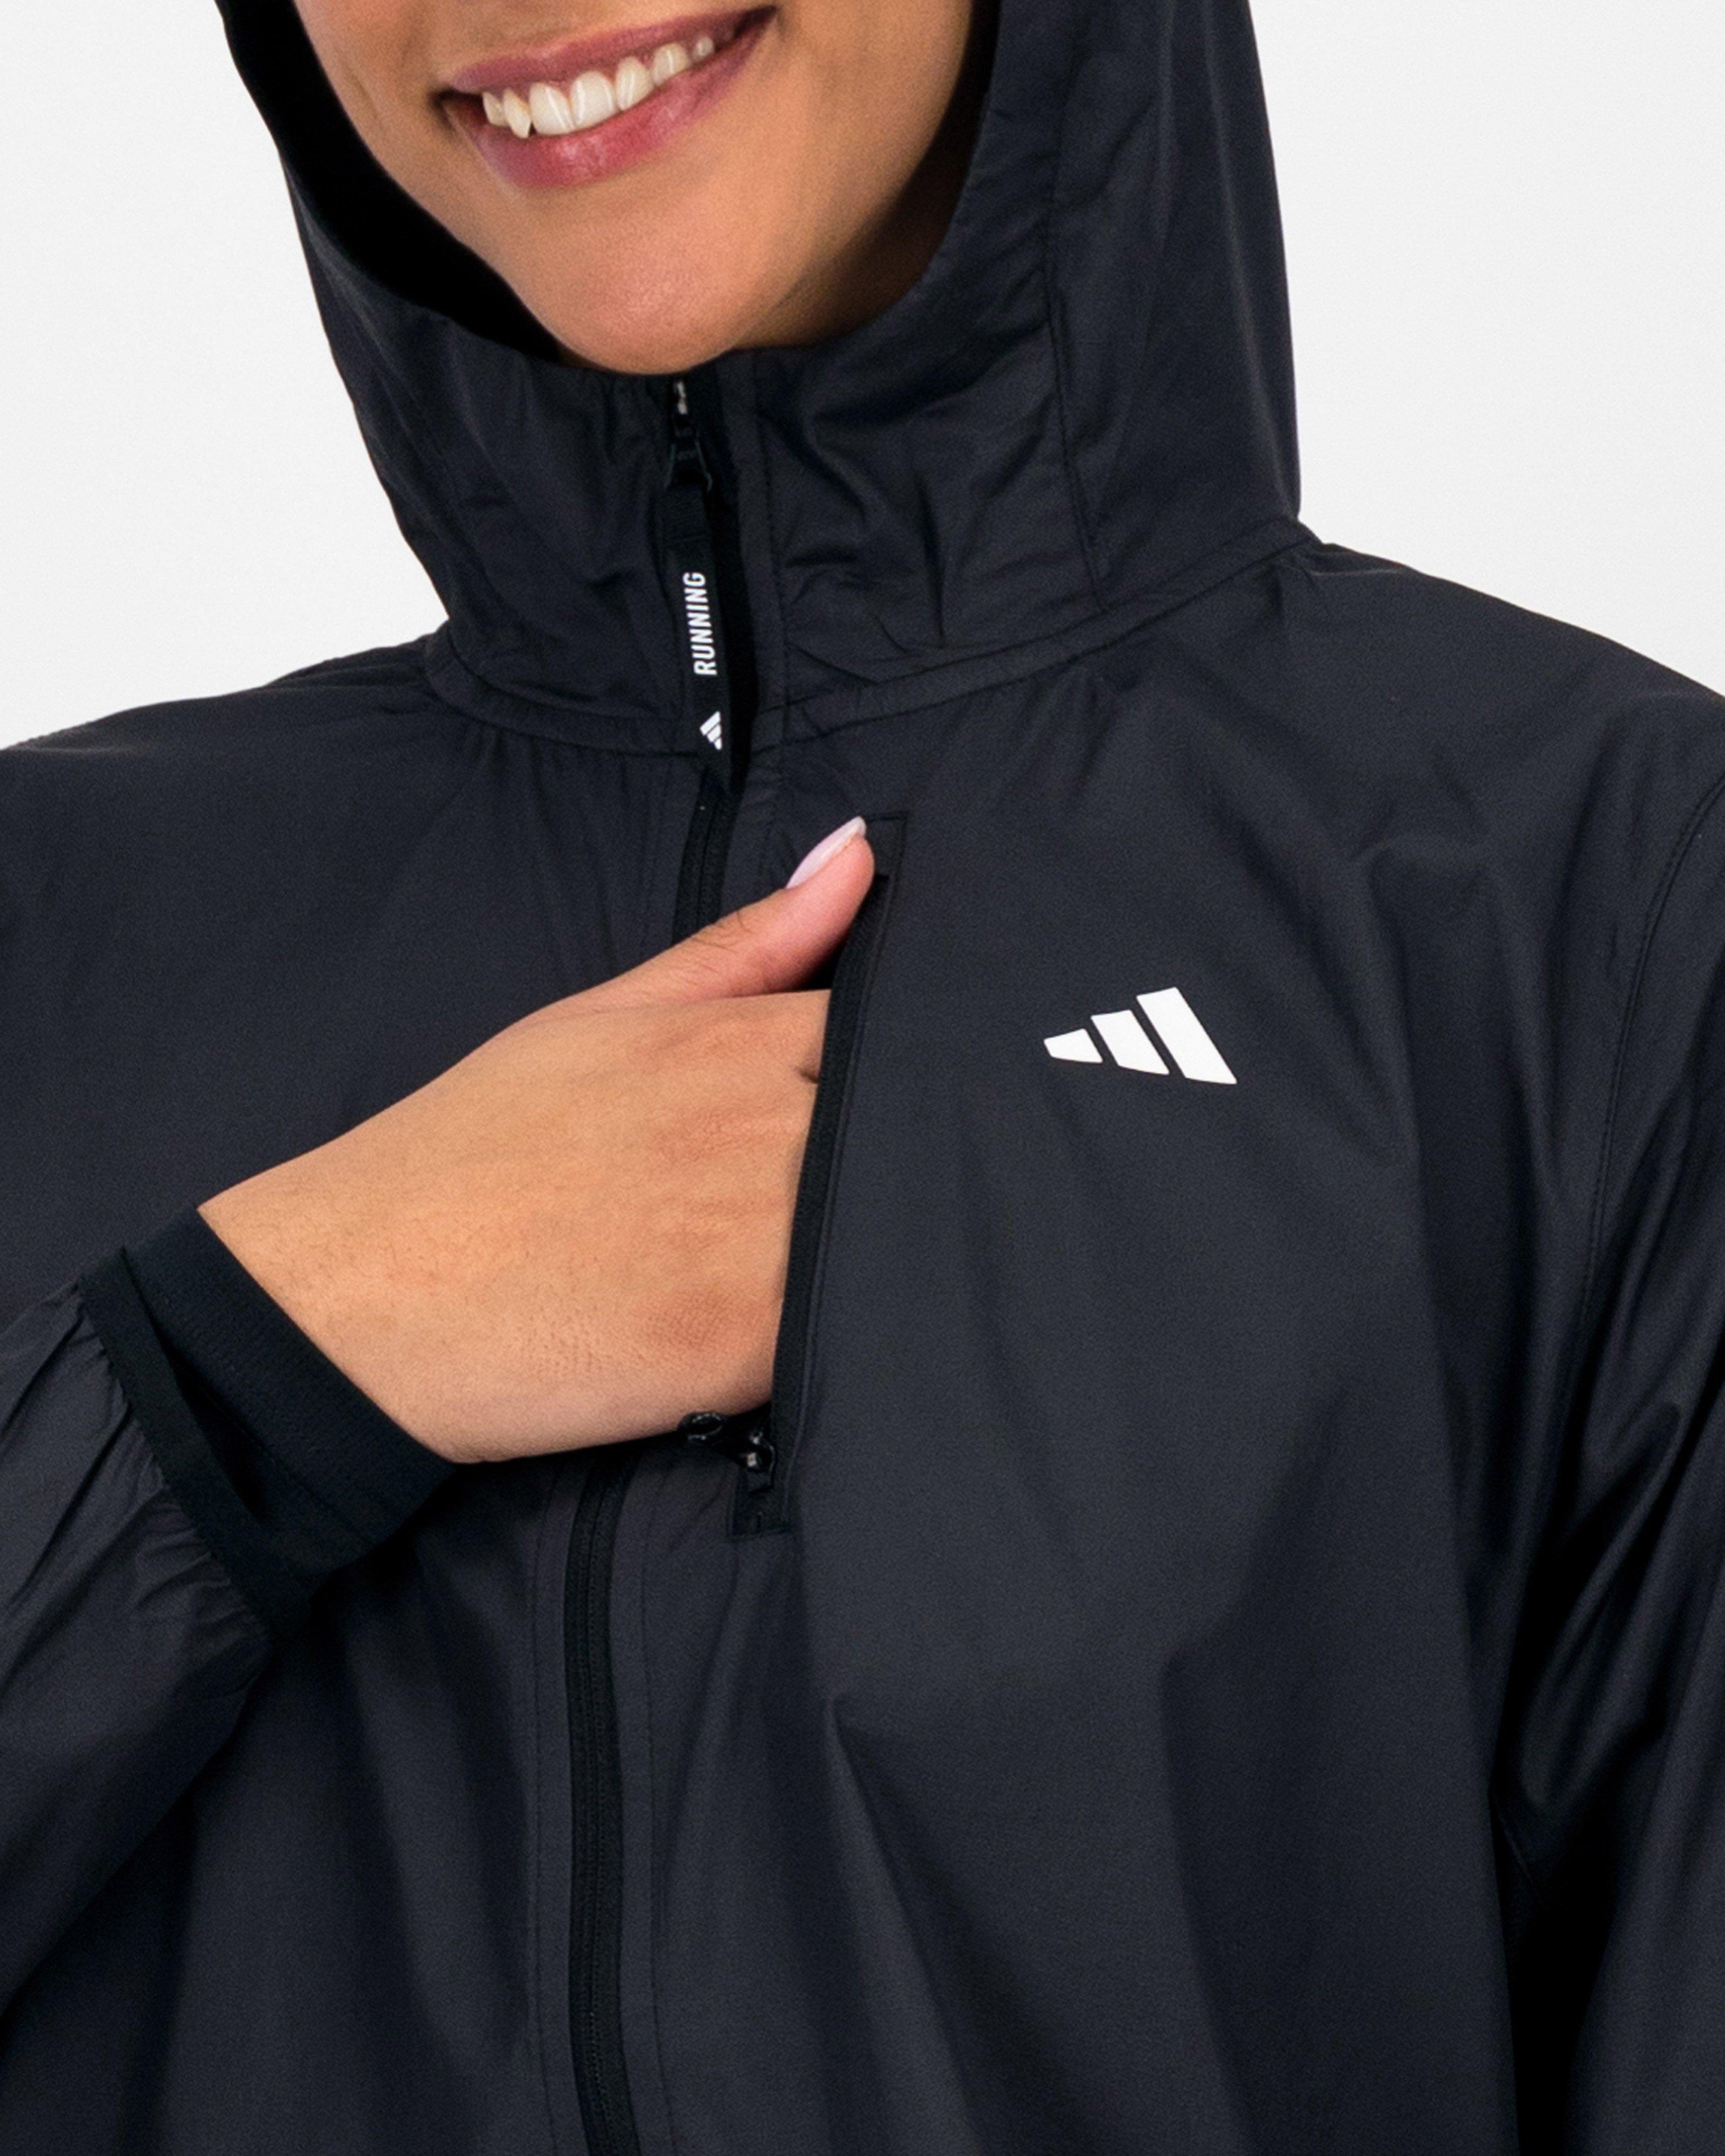 Adidas Women’s Own The Run Wind Resistant Jacket -  Black